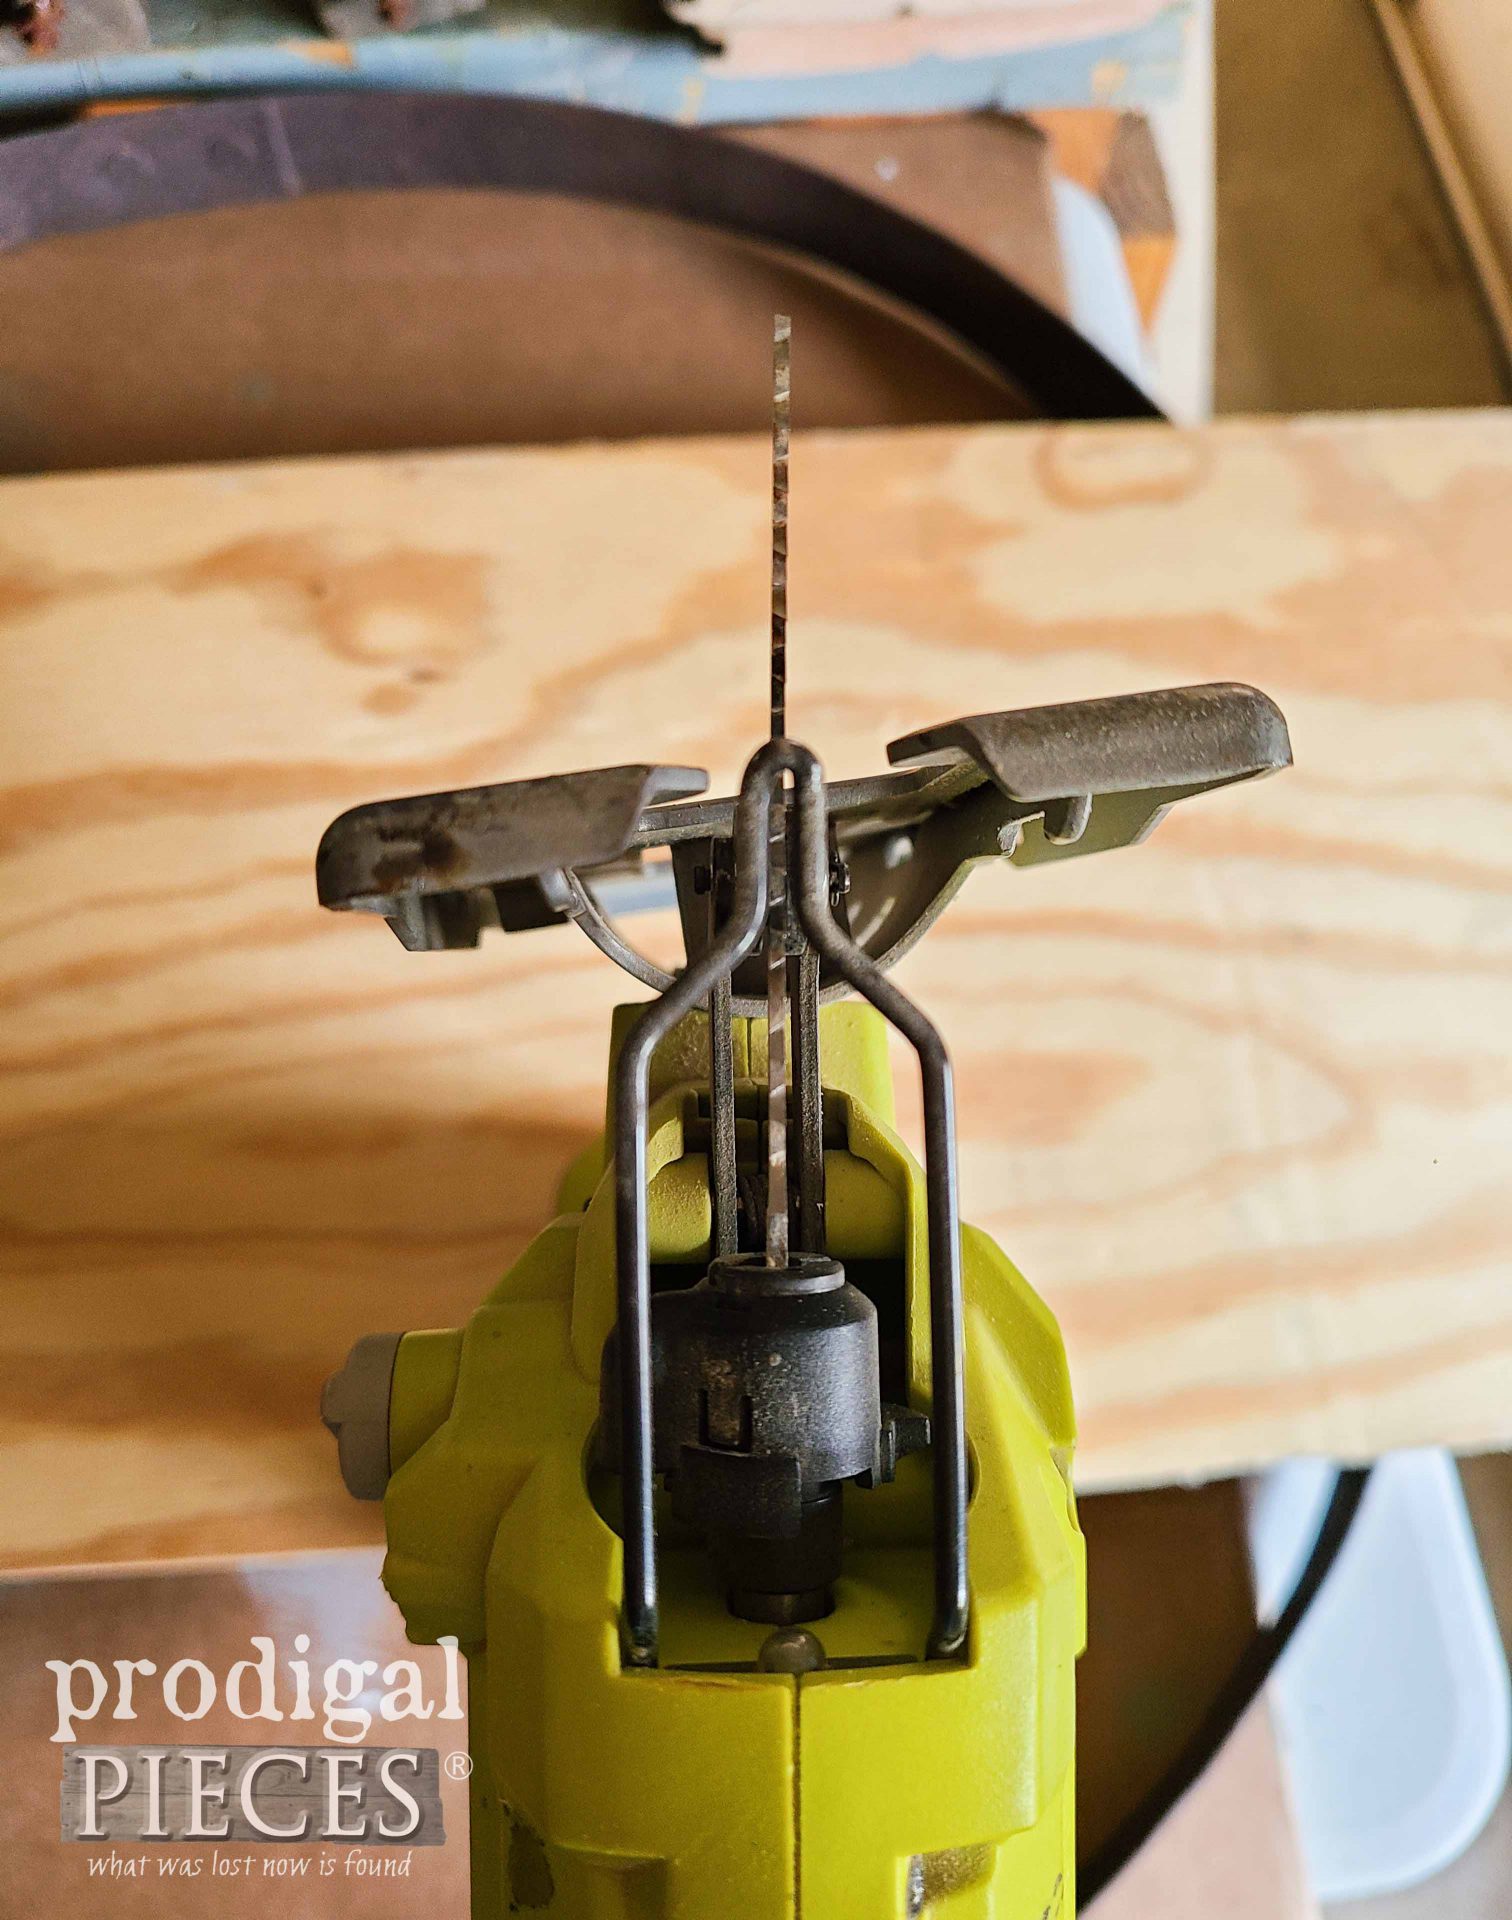 Angled Jigsaw Blade for Cutting | prodigalpieces.com 